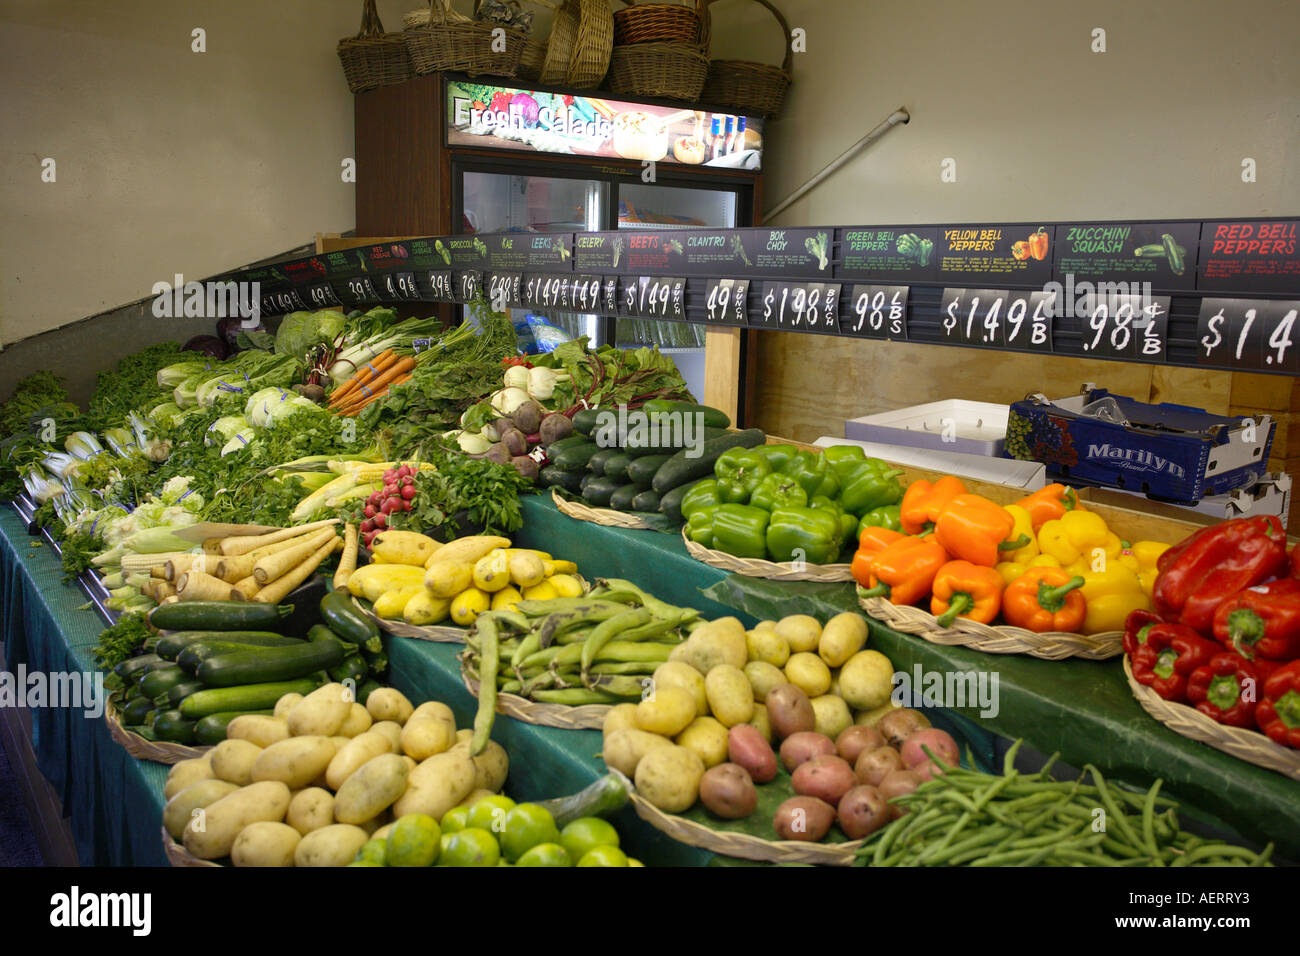 Farmers market shopping center Los Angeles. California, United States of America. Stock Photo